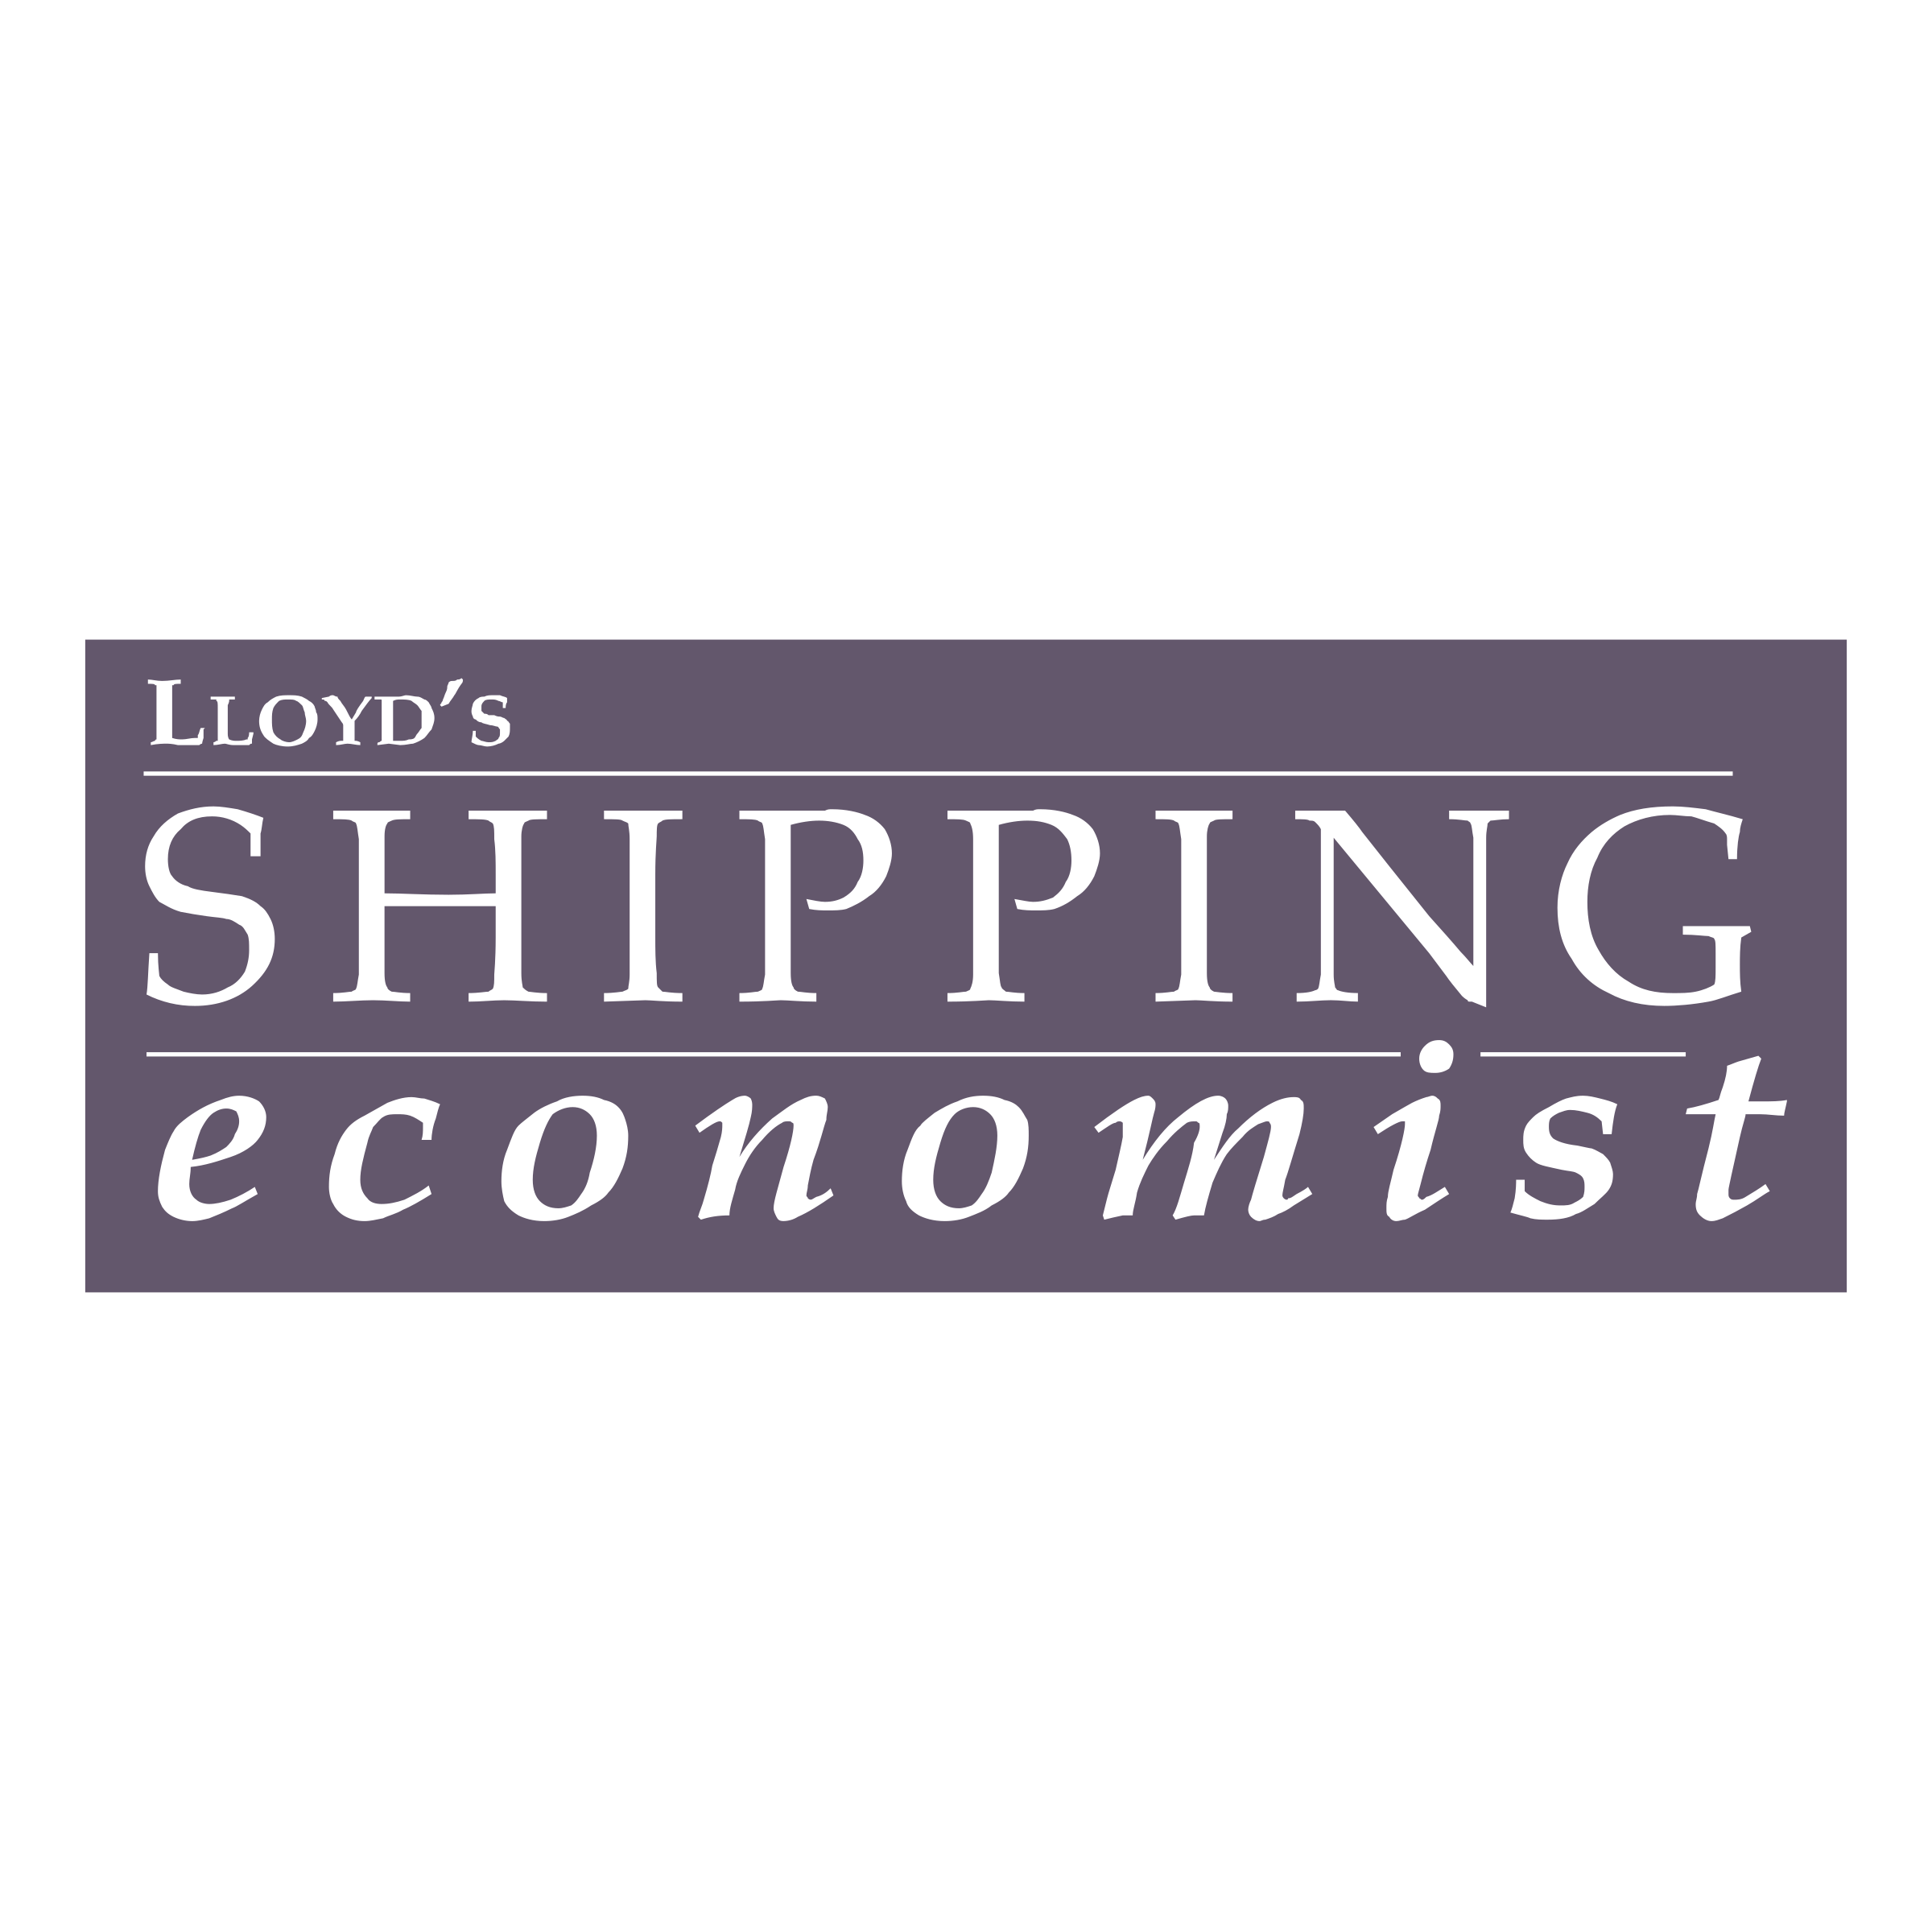 Economist Logo - Shipping Economist Logo PNG Transparent & SVG Vector - Freebie Supply